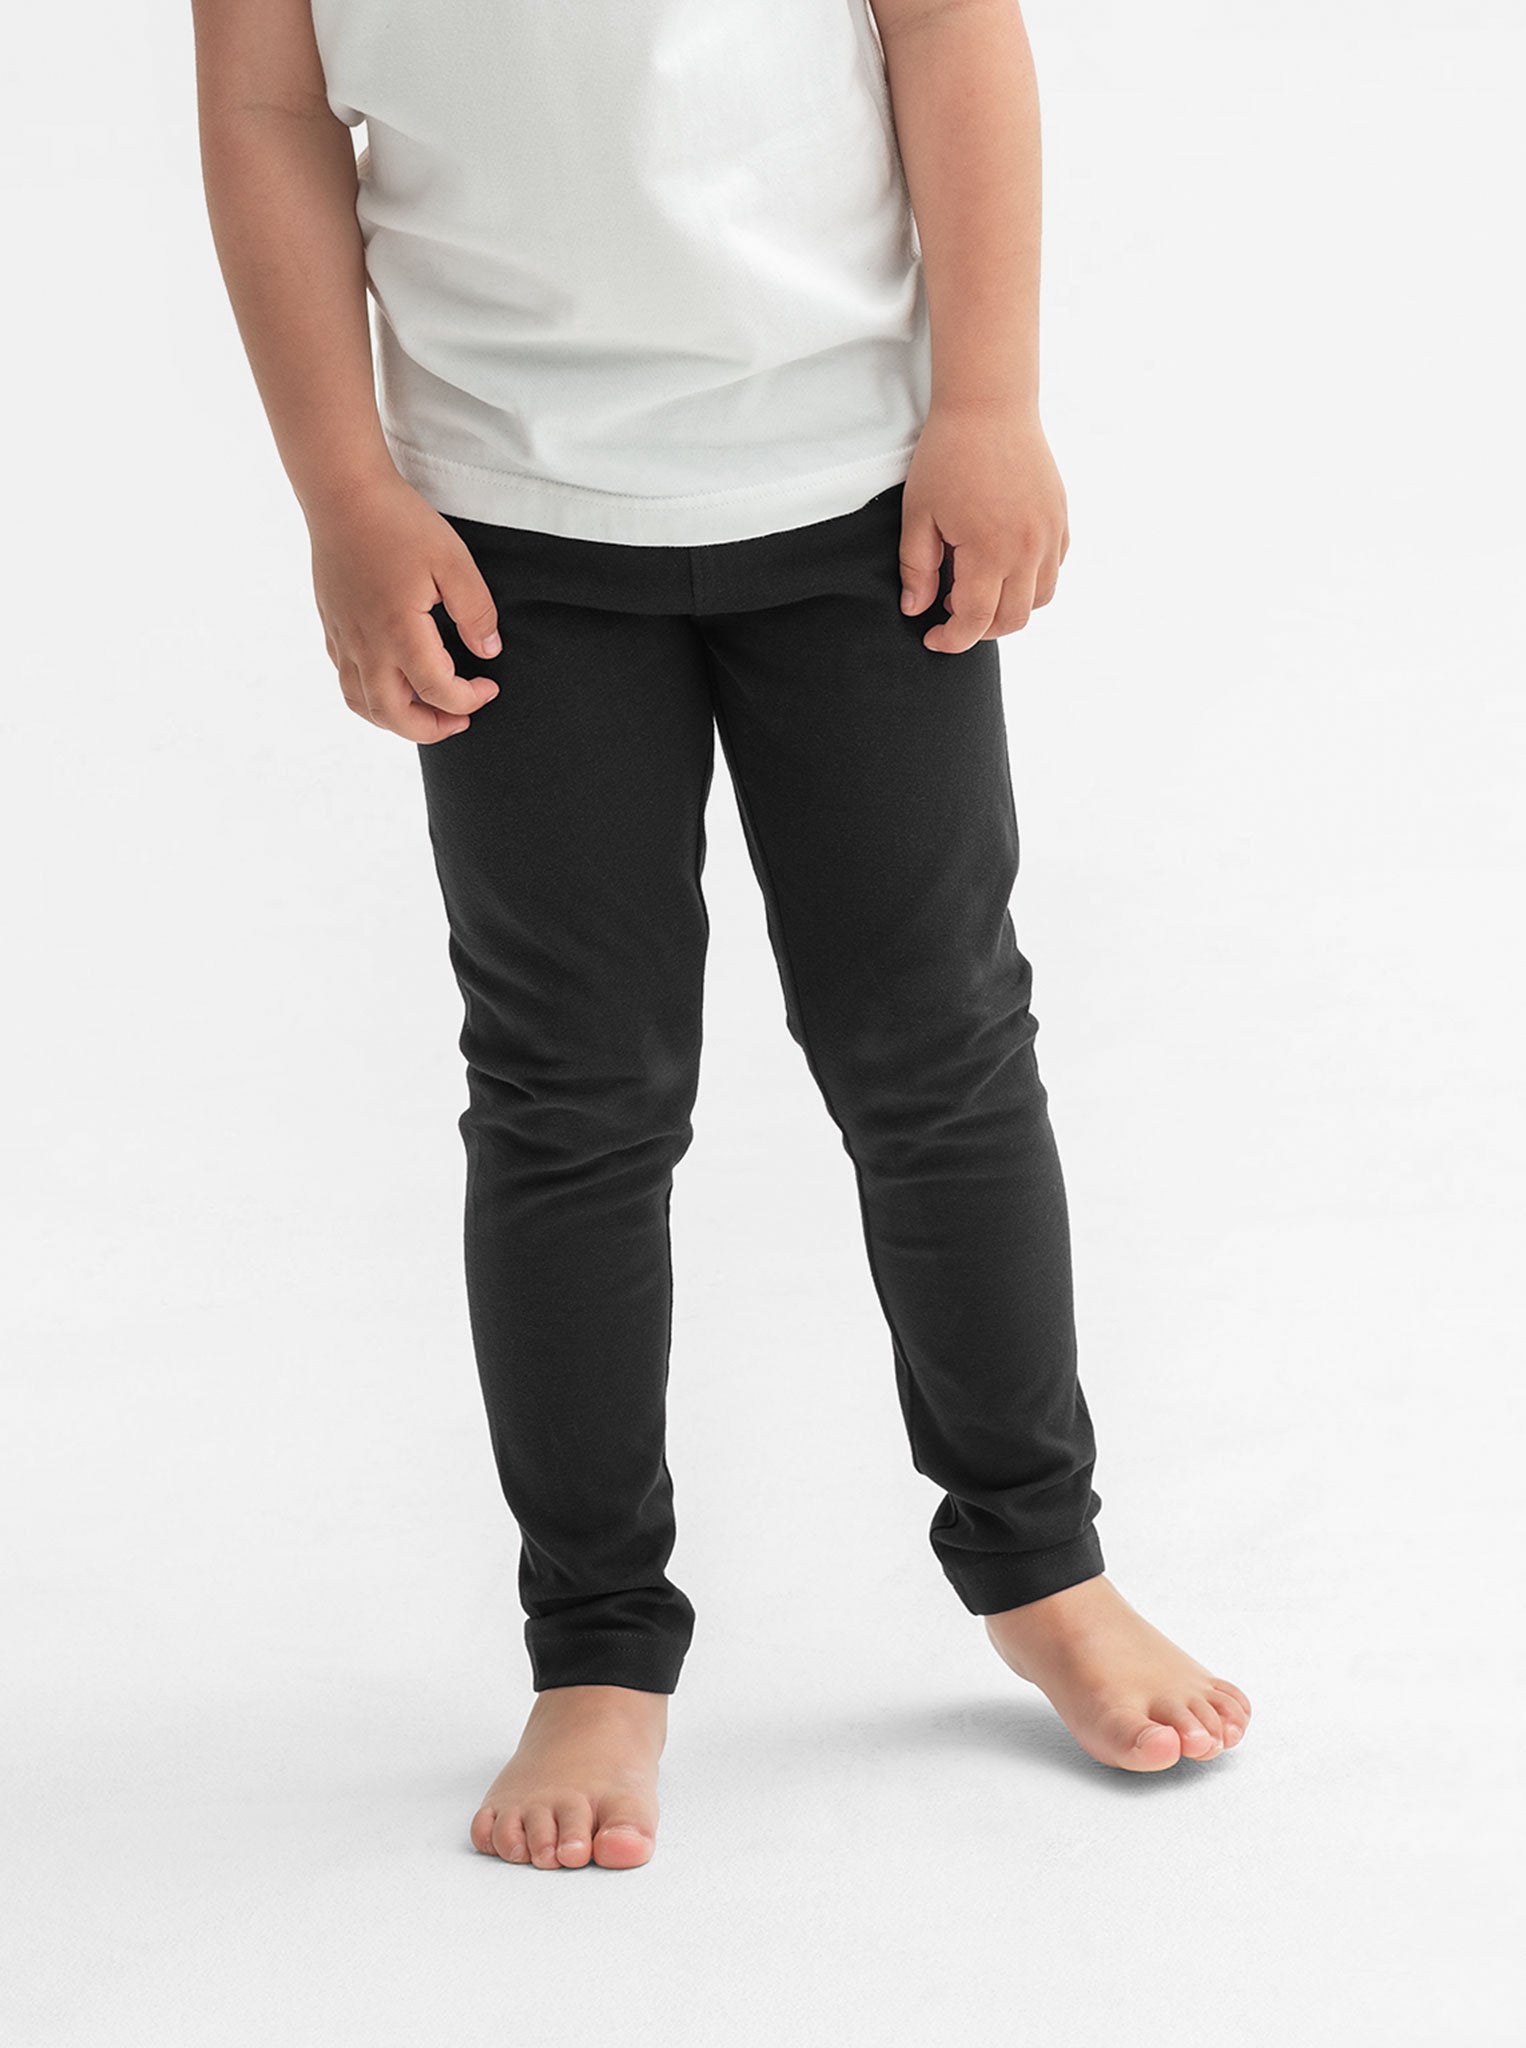 Organic cotton black kids leggings, comfortable ethical Polarn o. pyret quality 